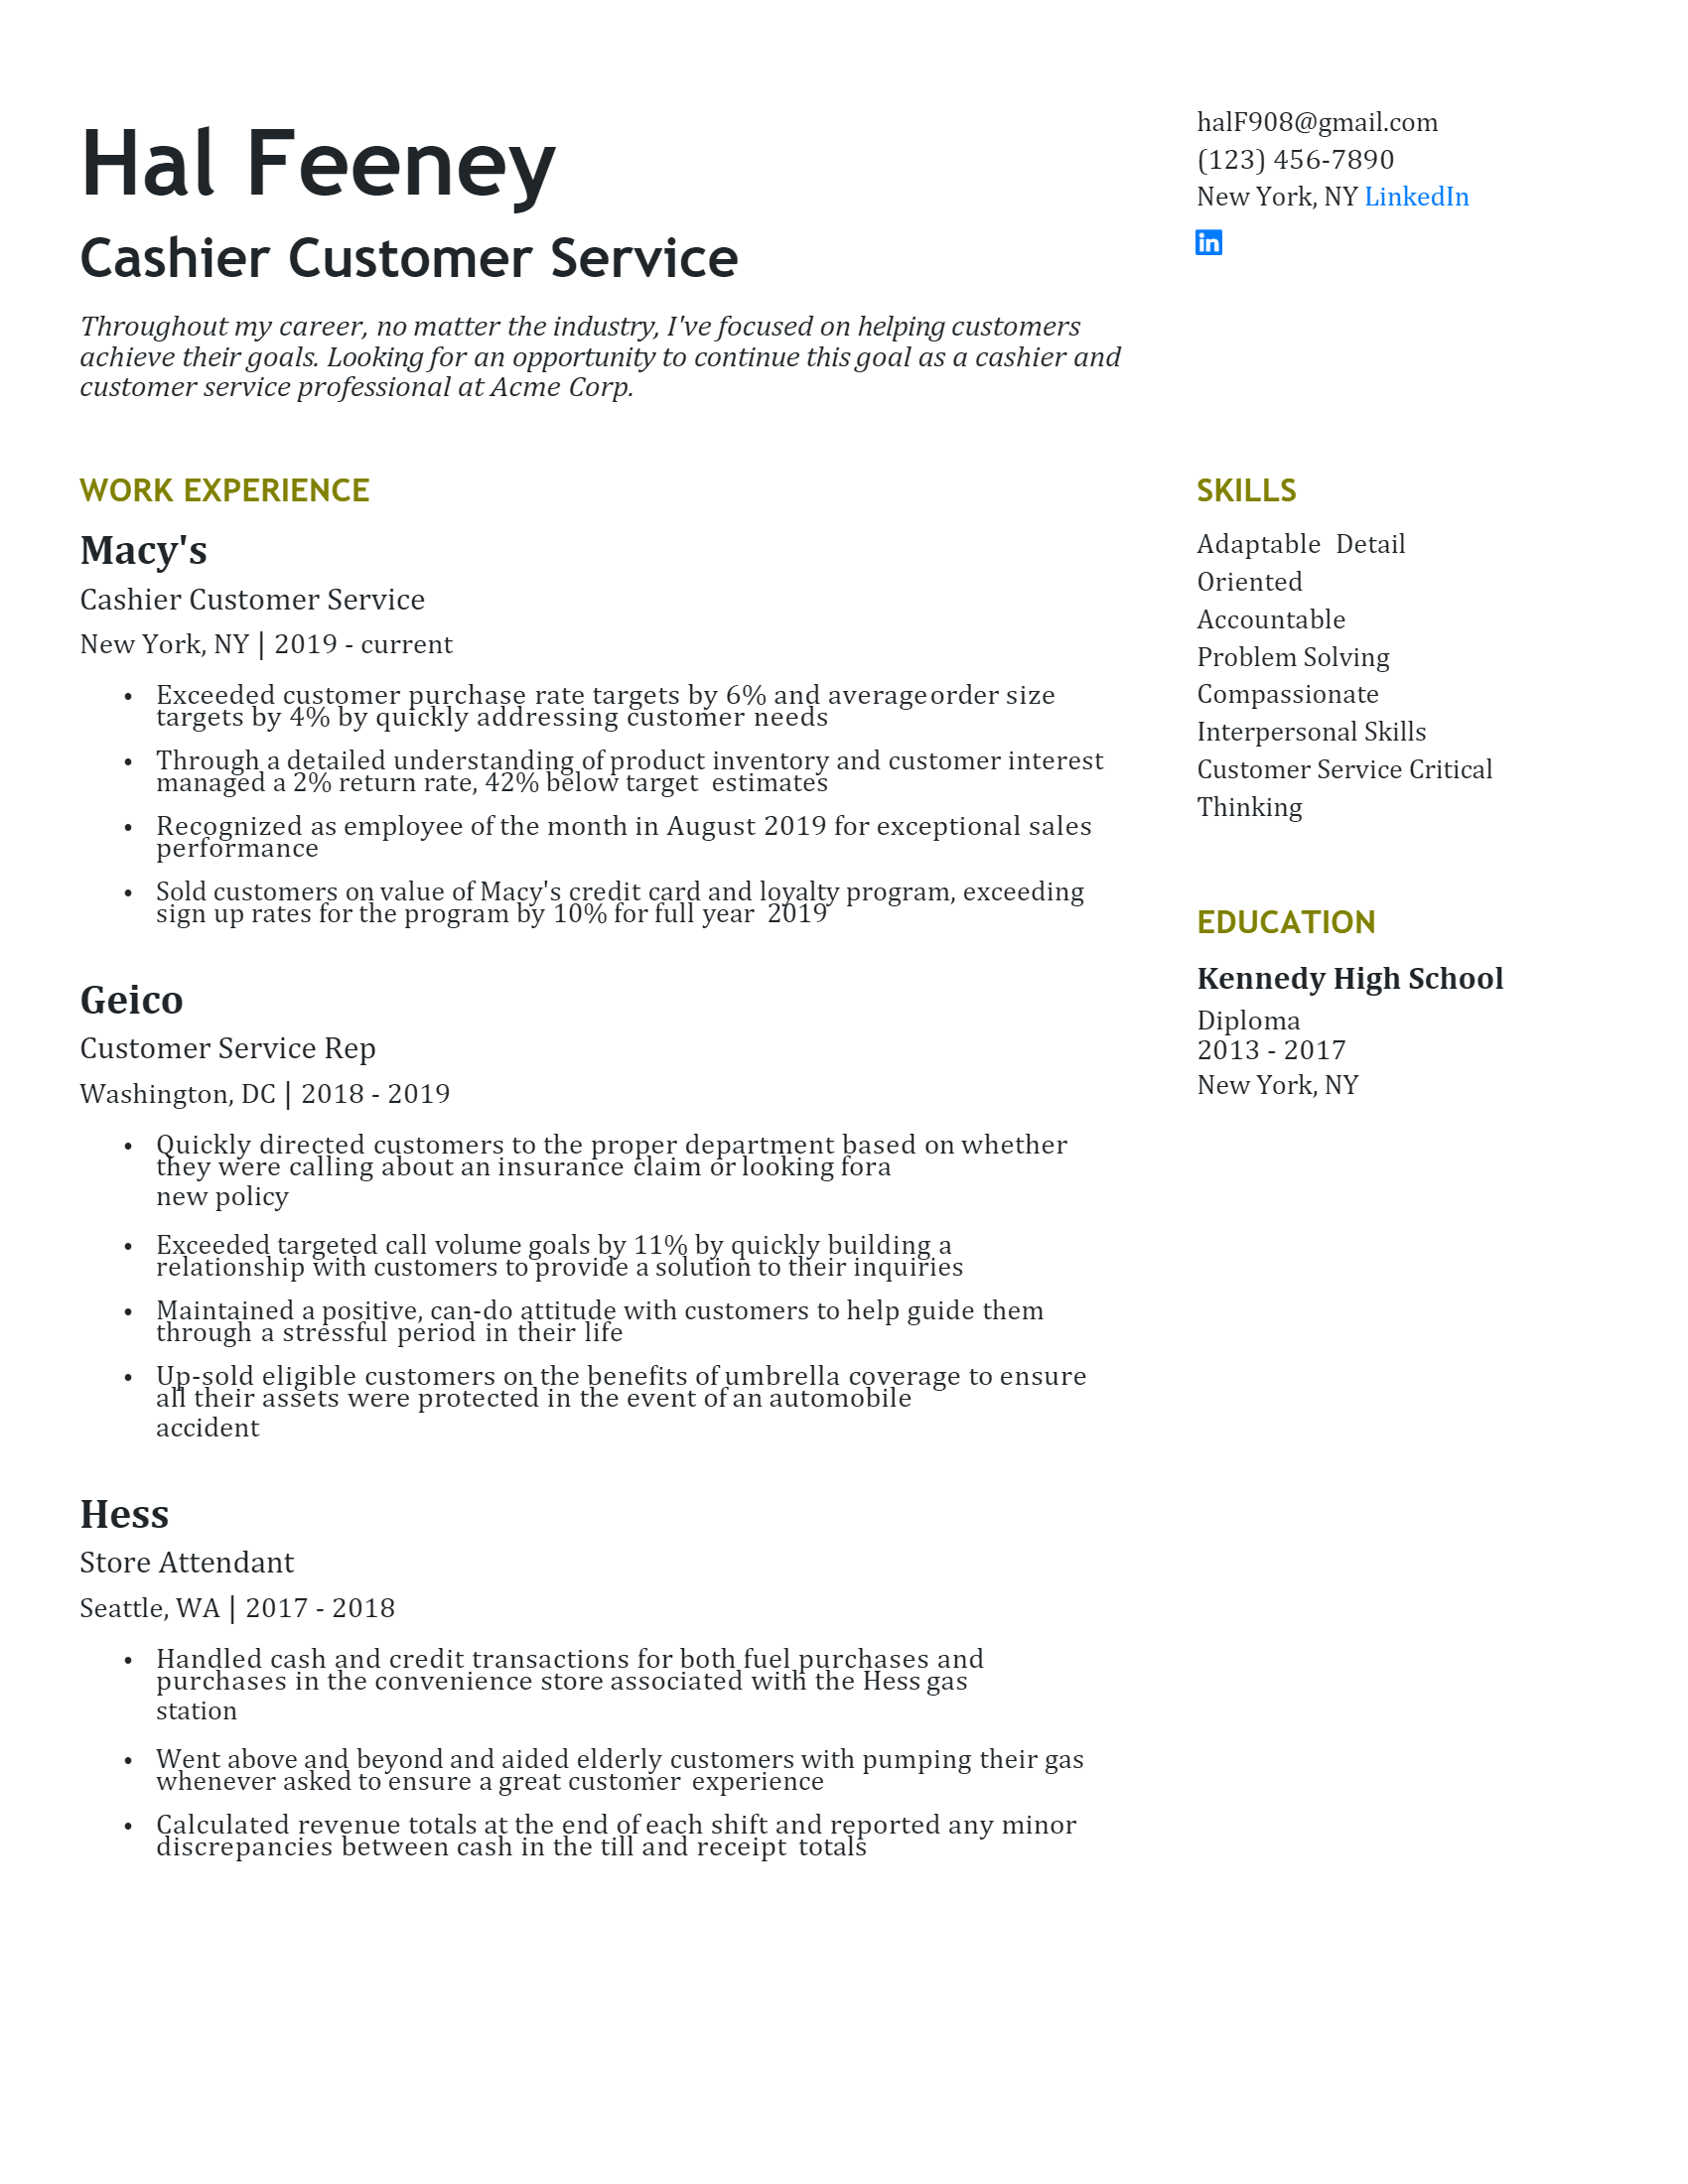 Cashier Customer Service Resume .Docx (Word)